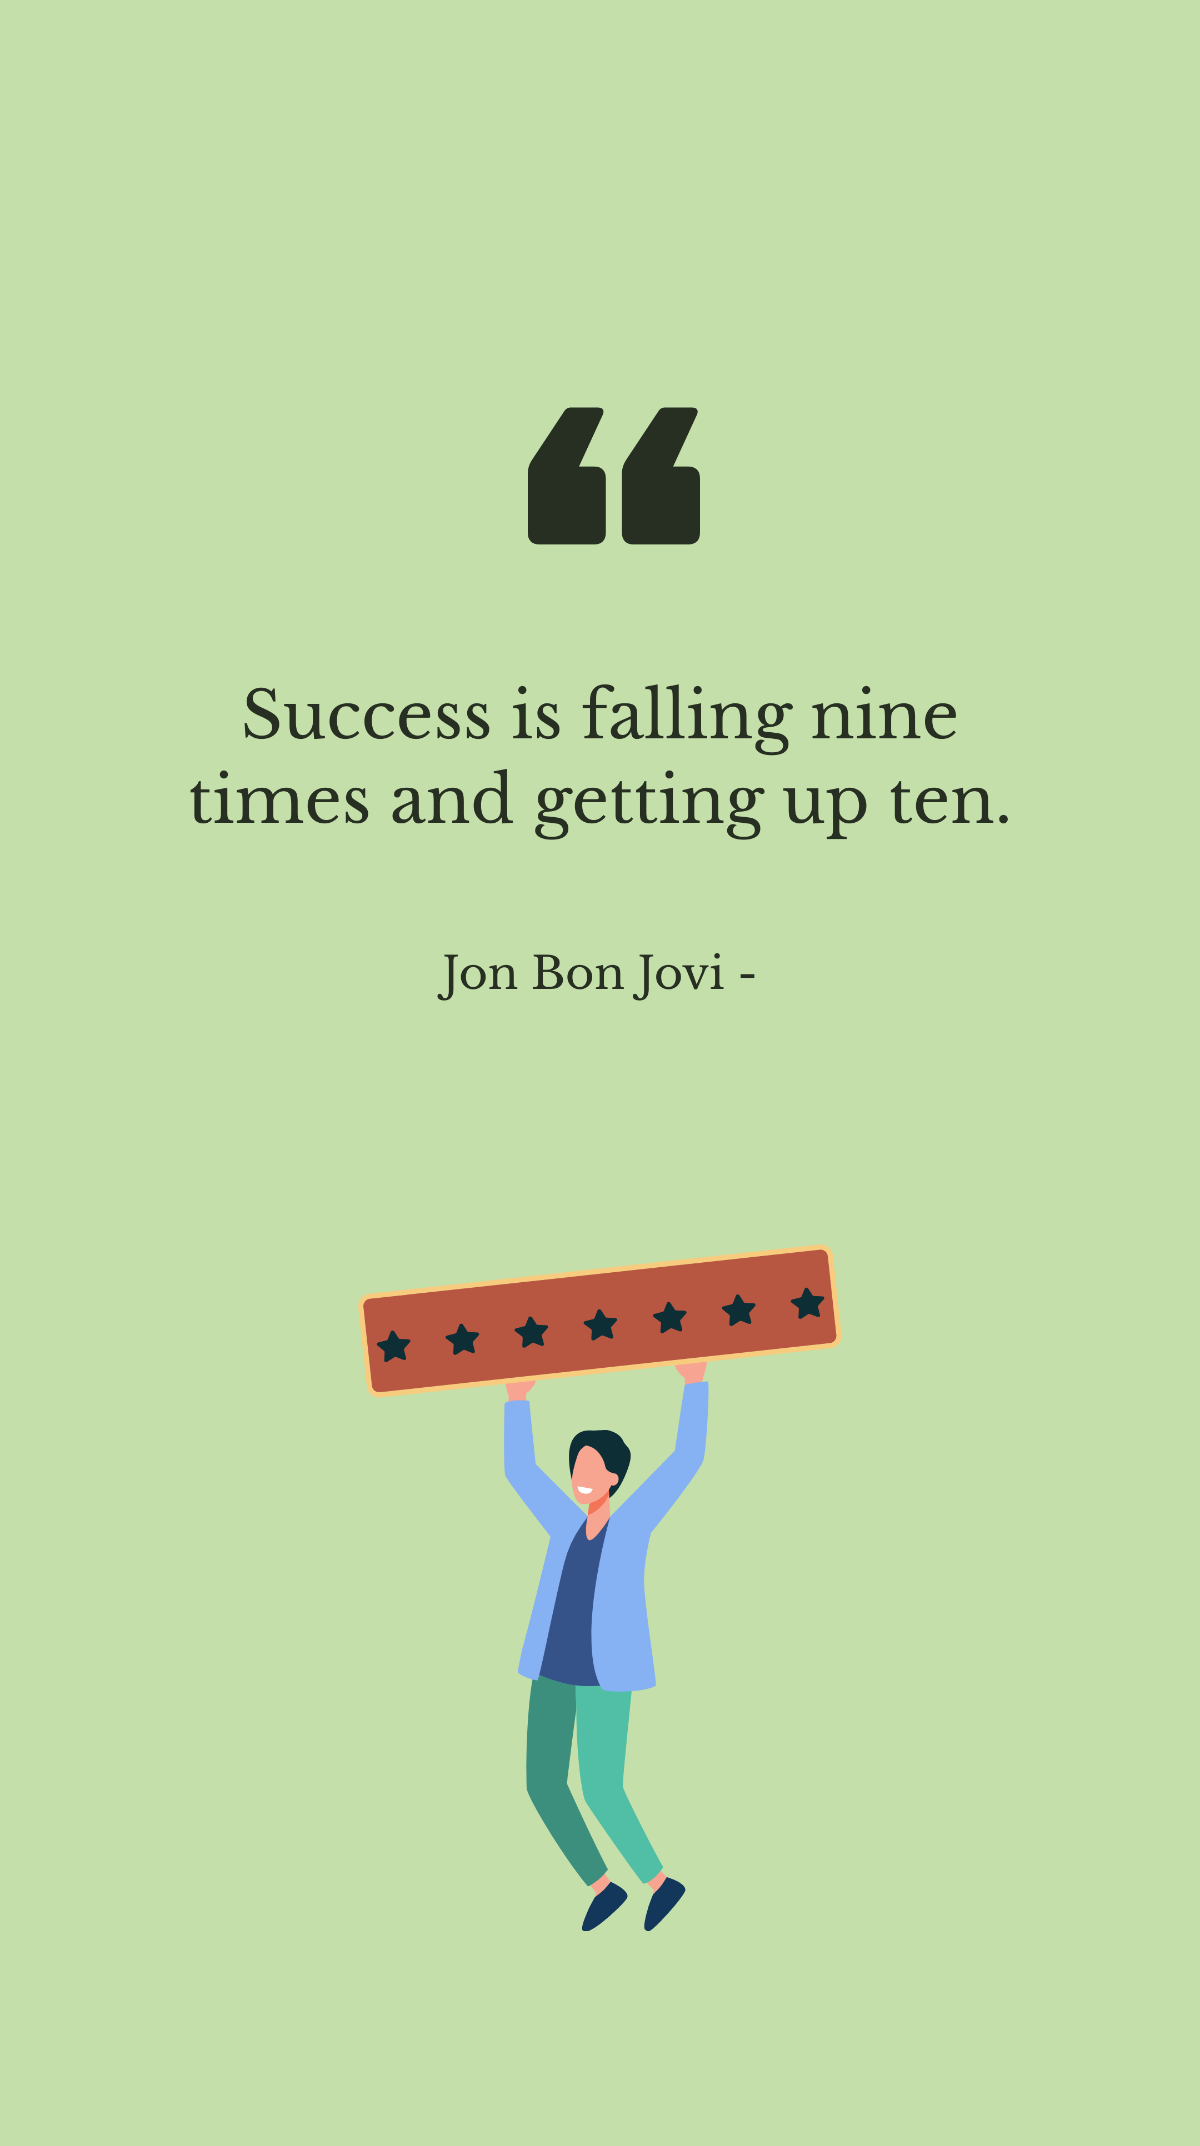 Jon Bon Jovi - Success is falling nine times and getting up ten. Template